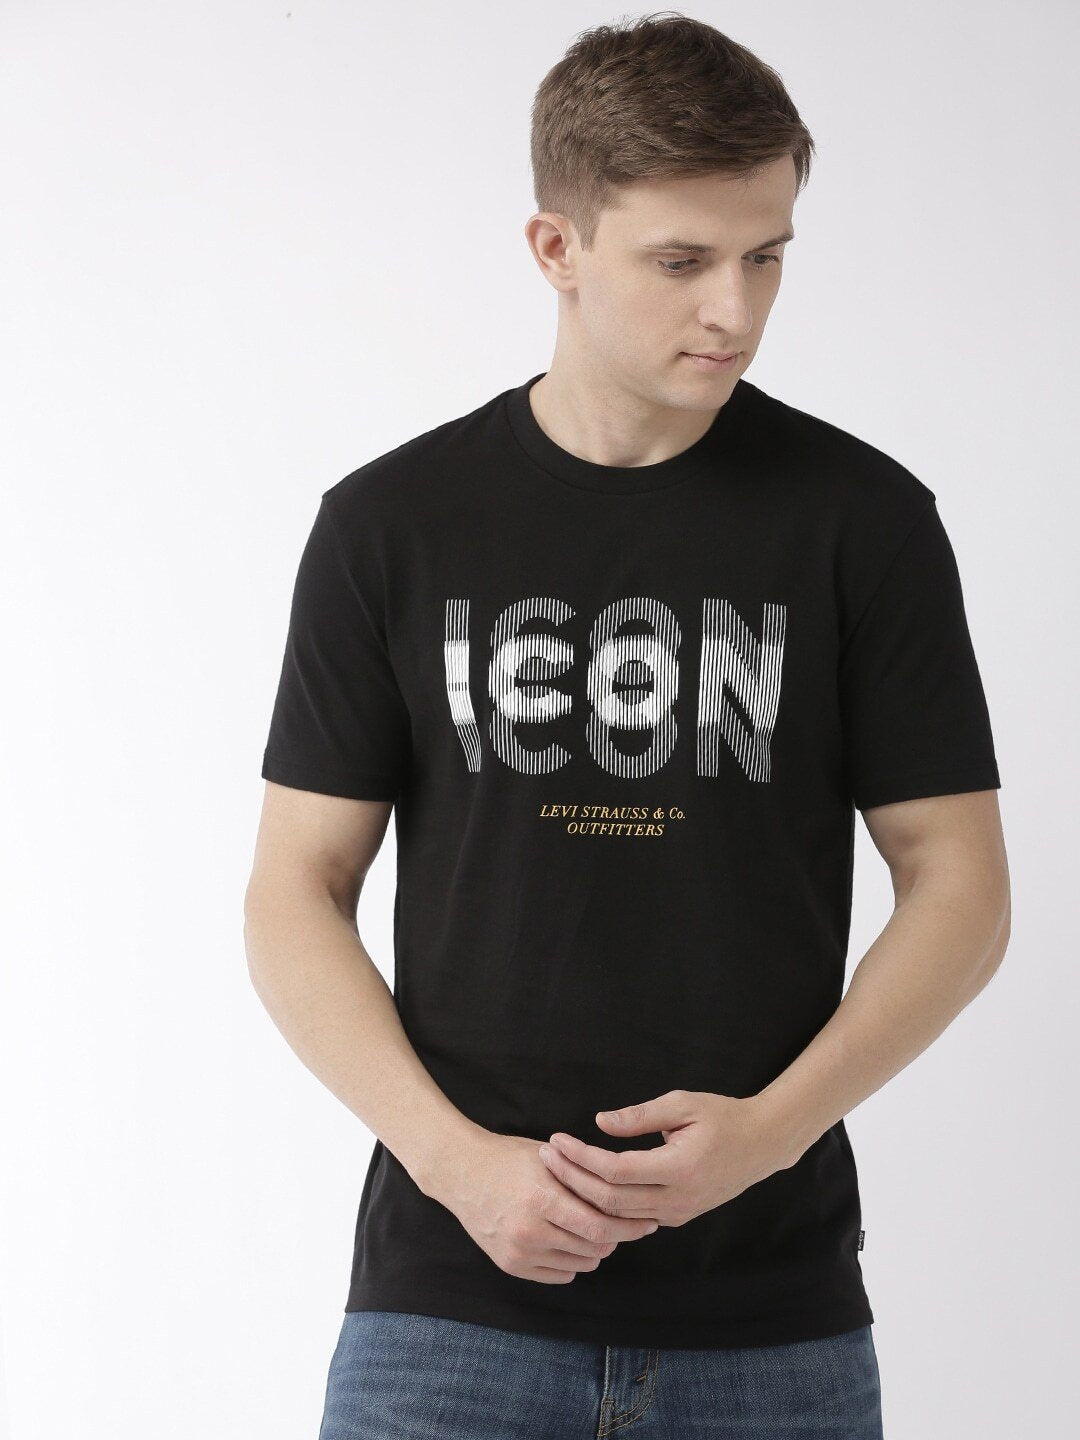 Men Black Printed Round Neck T-shirt-38719-0038